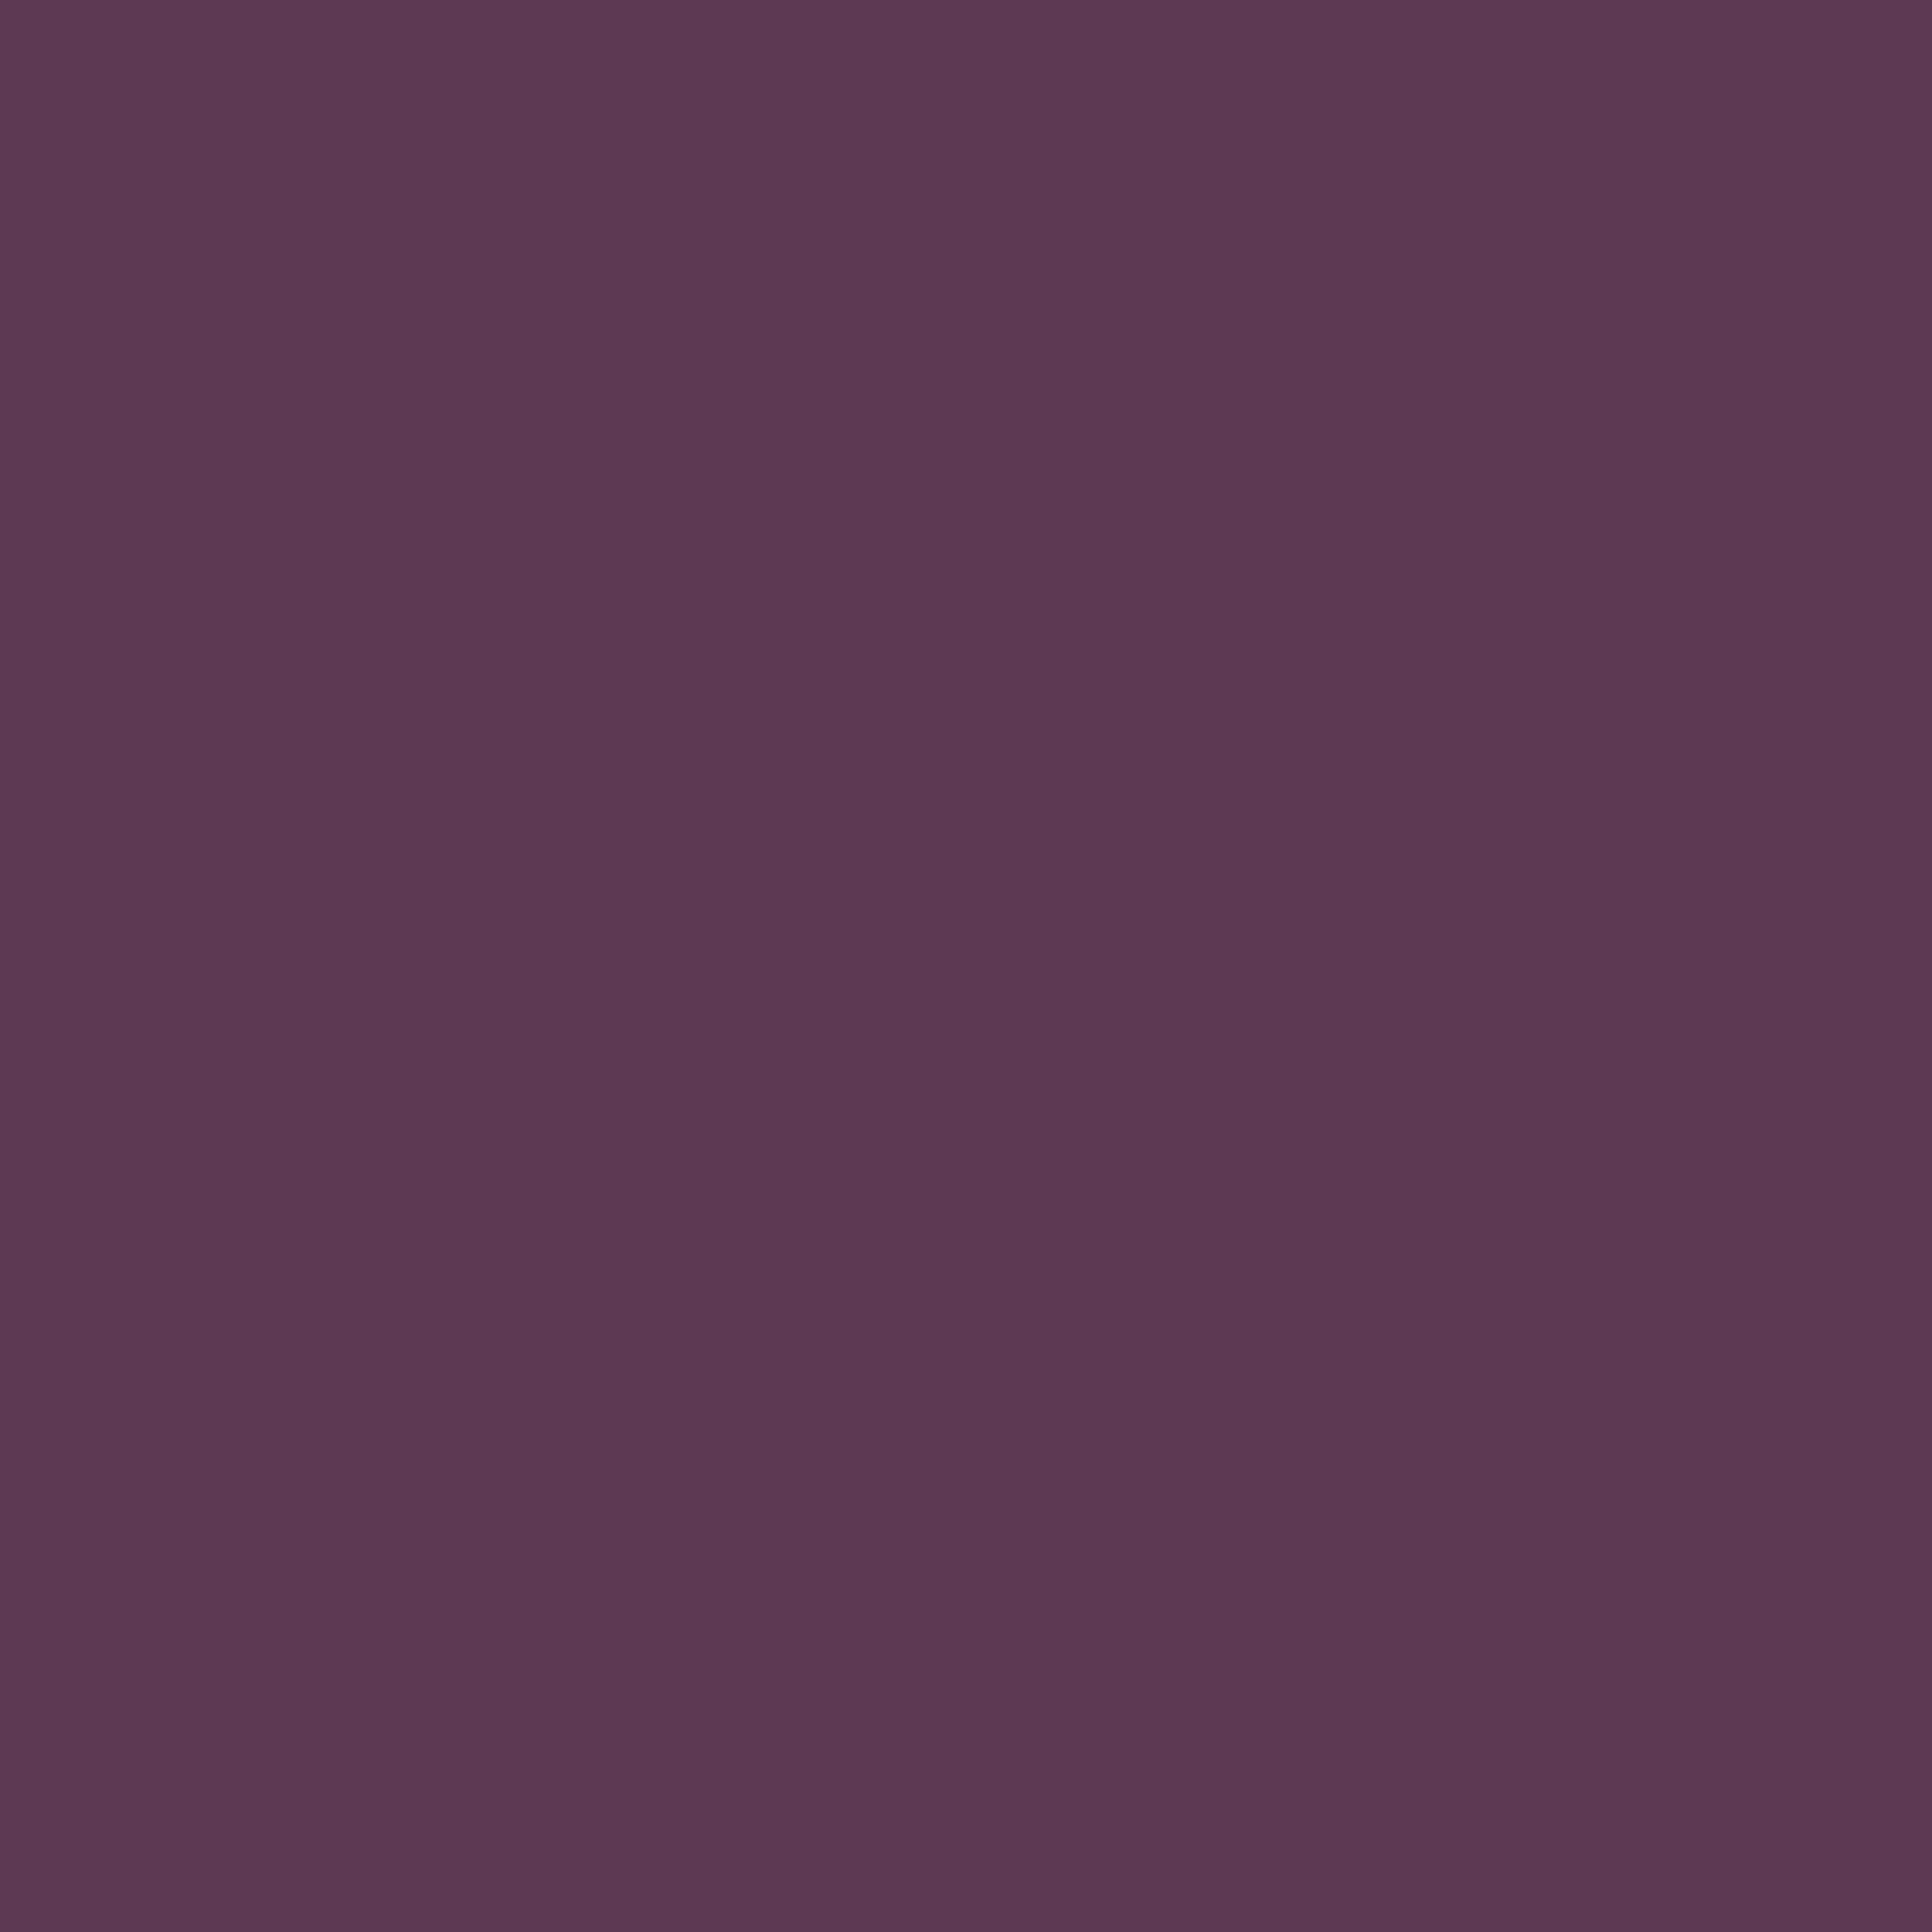 2732x2732 Dark Byzantium Solid Color Background